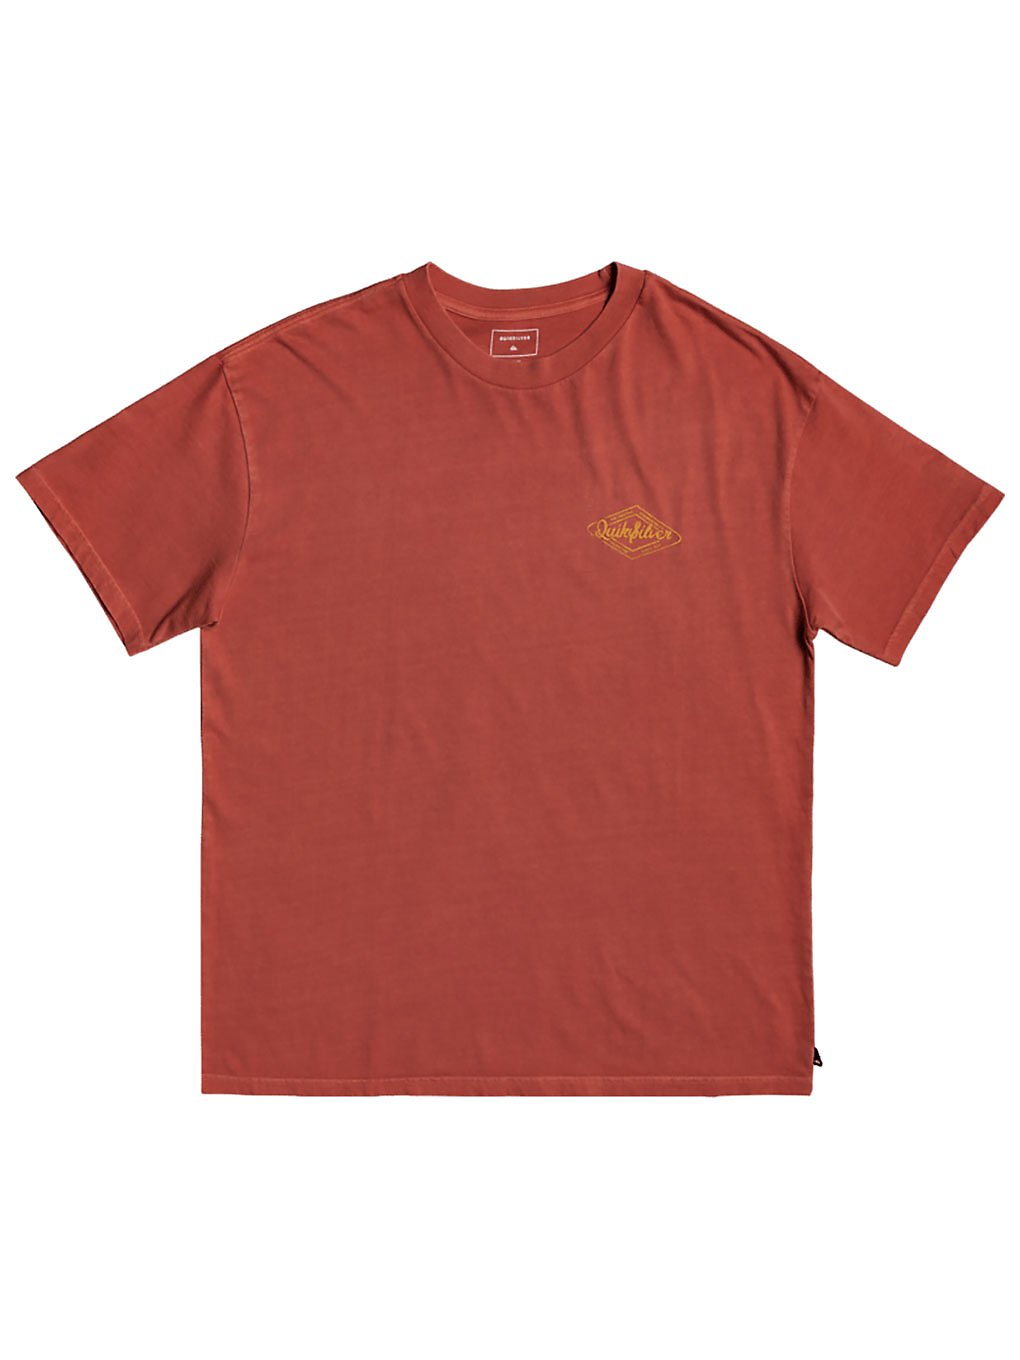 Quiksilver Harmony Hall T-Shirt redwood